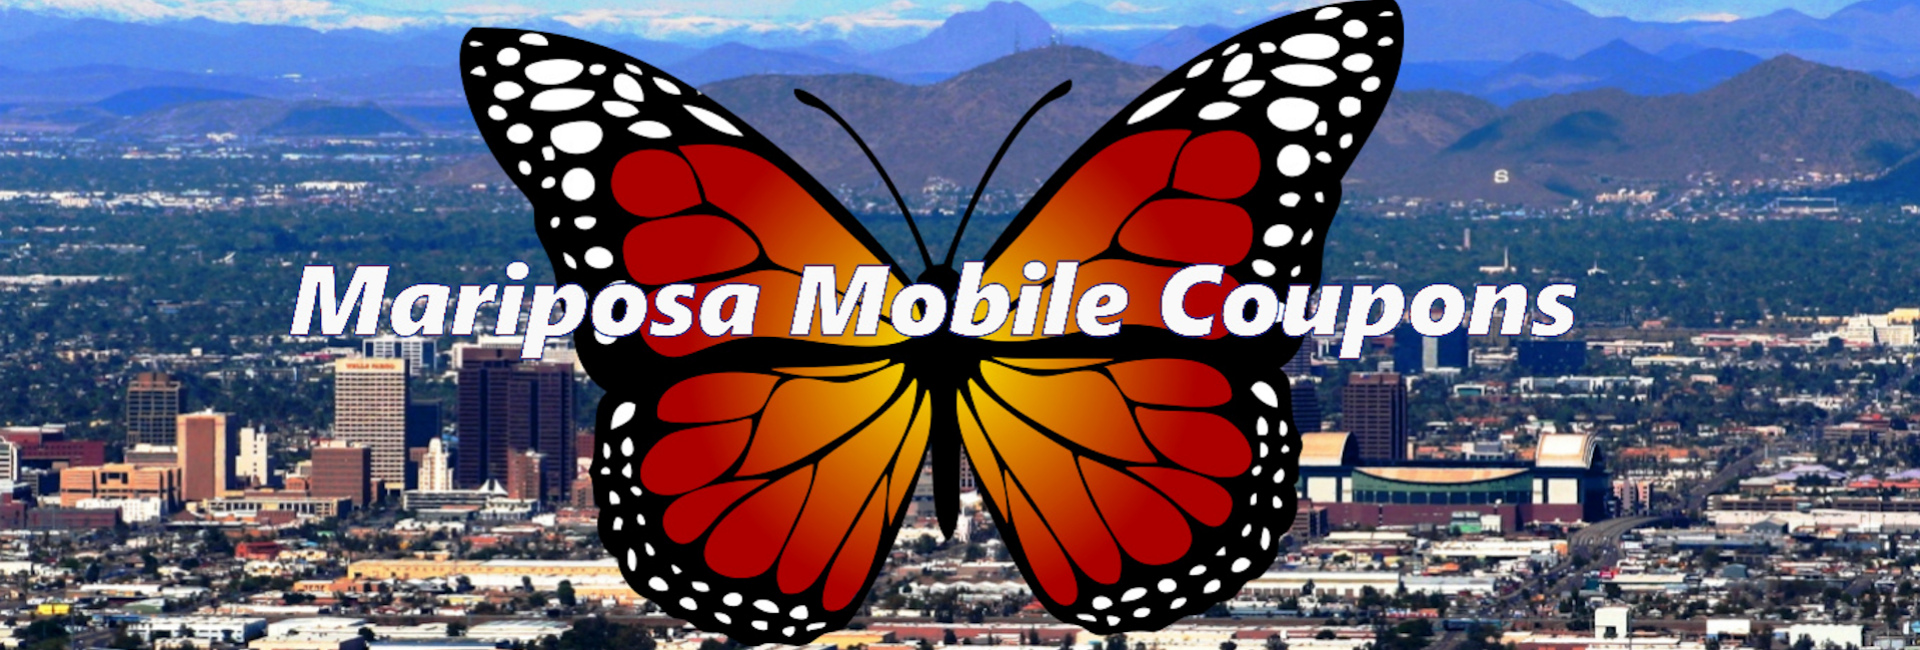 Mariposa Mobile Coupons